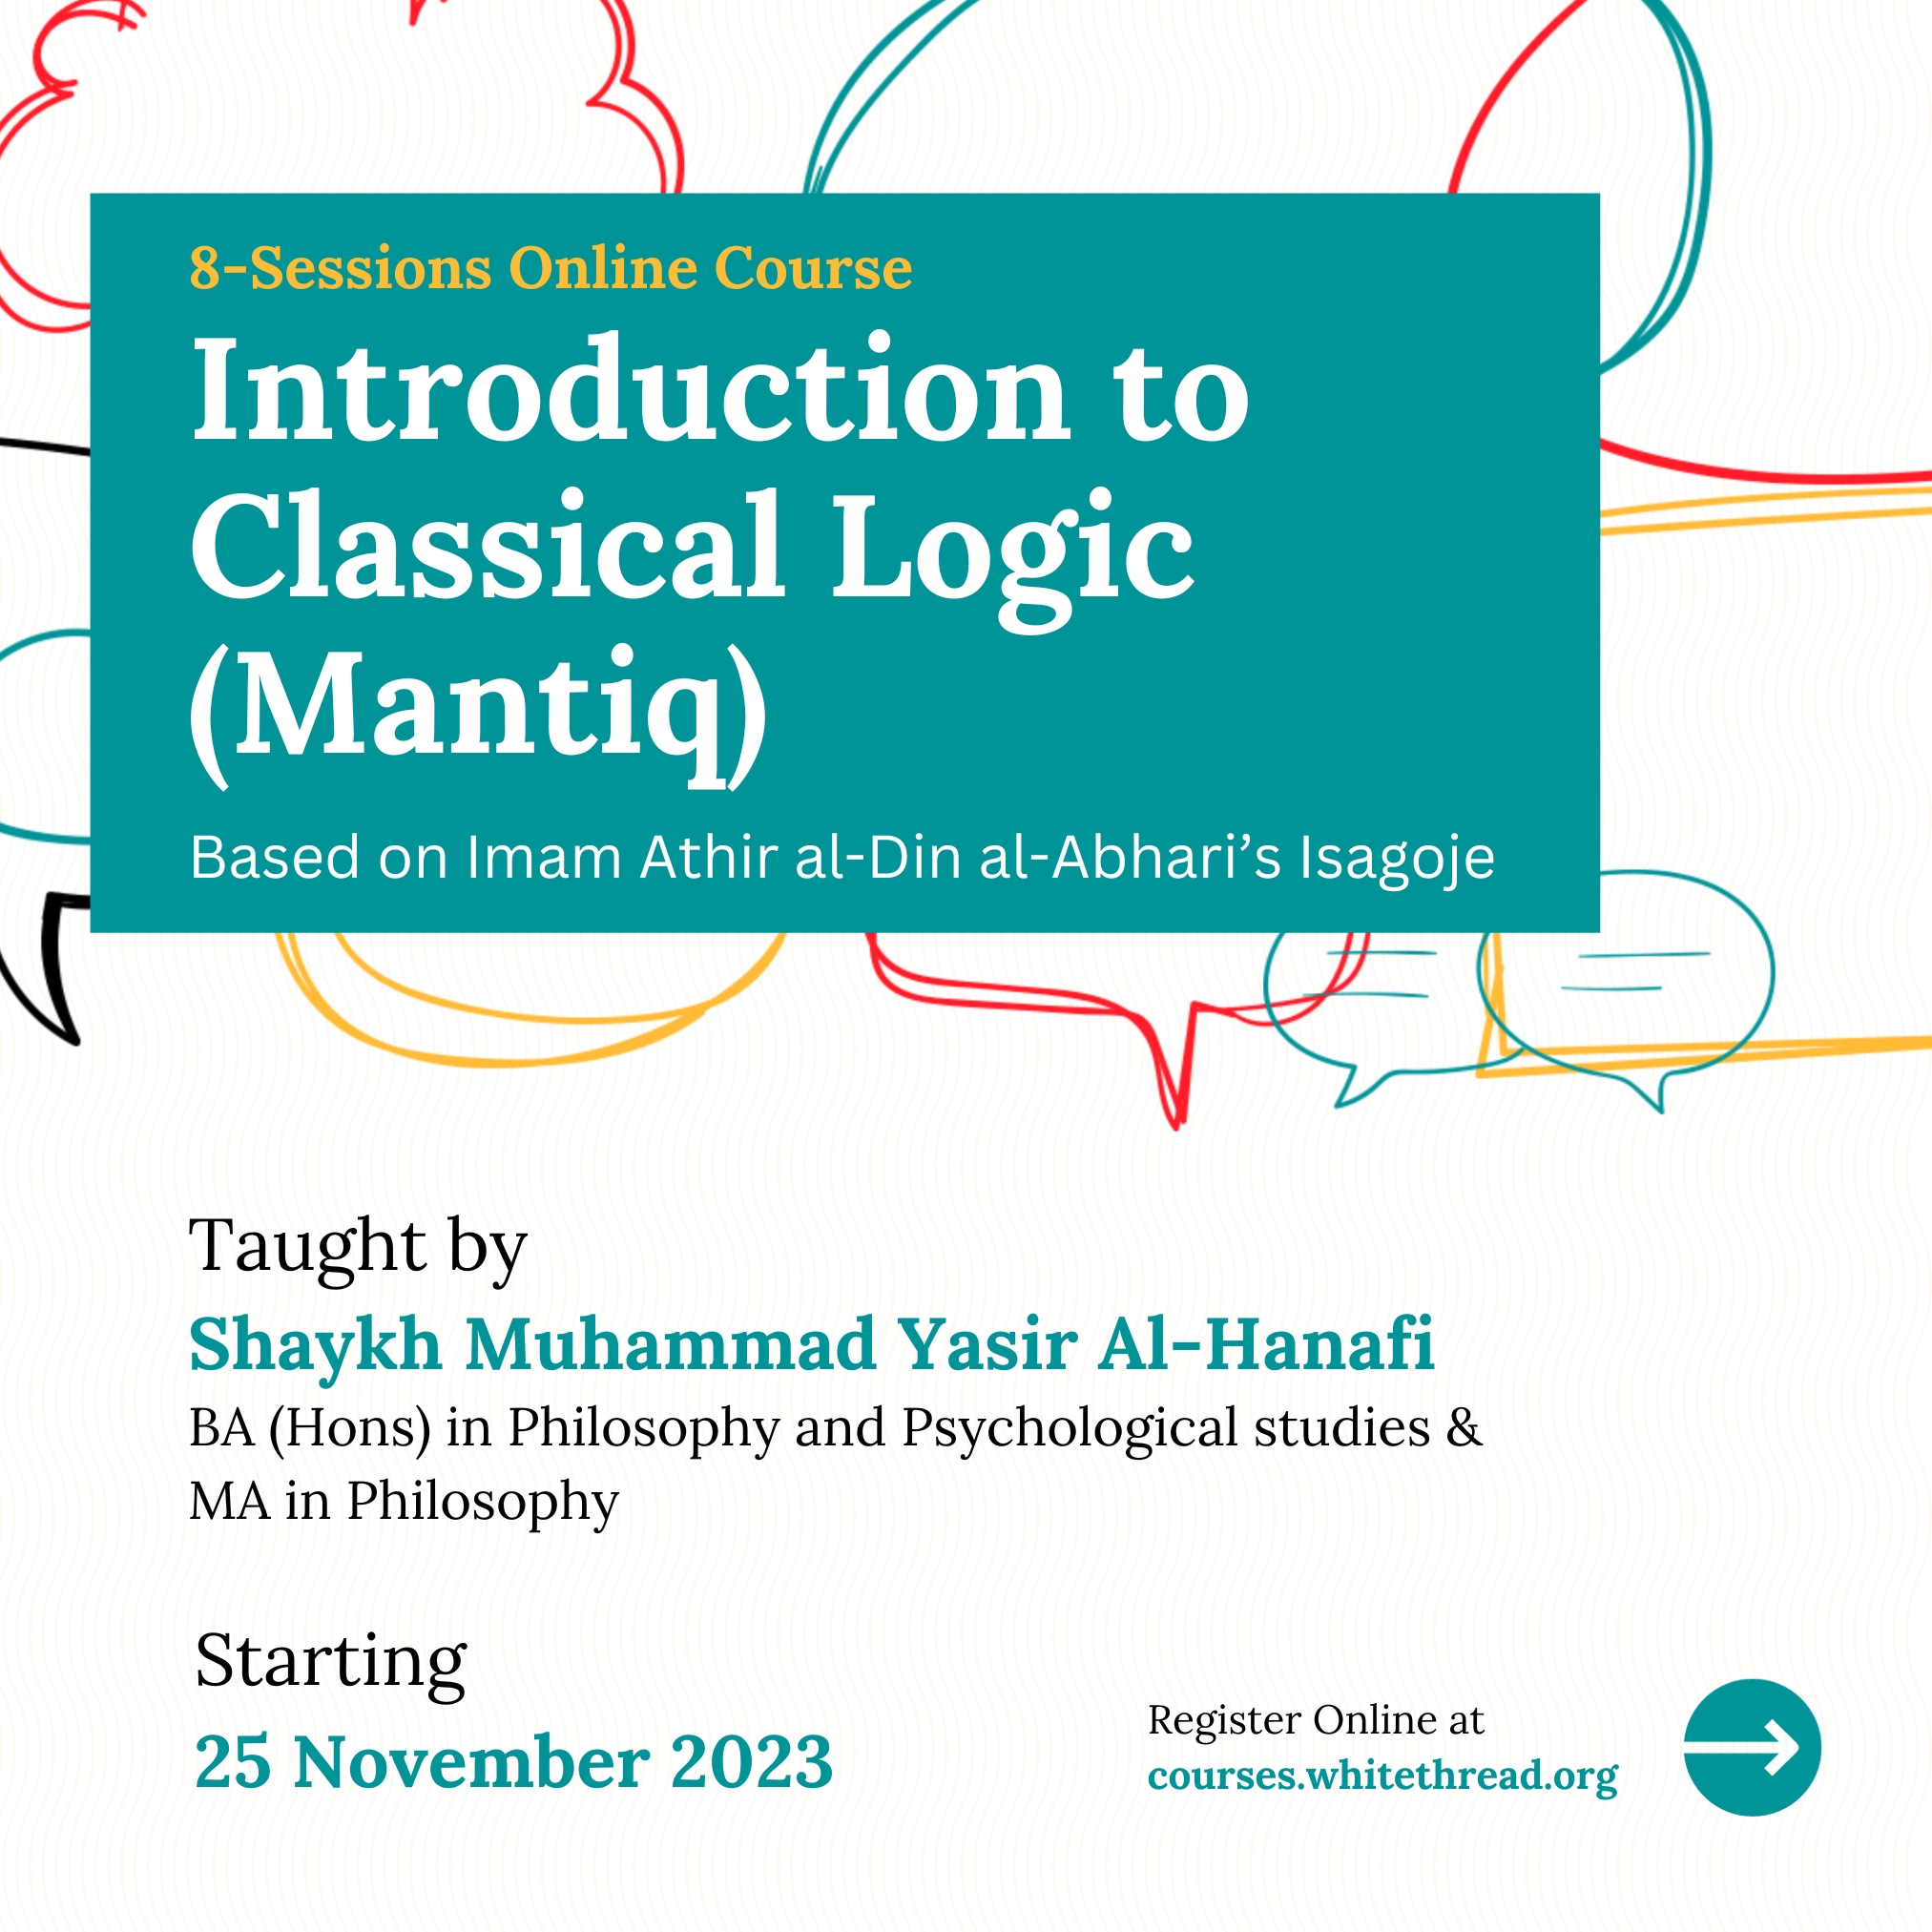 Introduction to Classical Logic (Mantiq) - Social Media